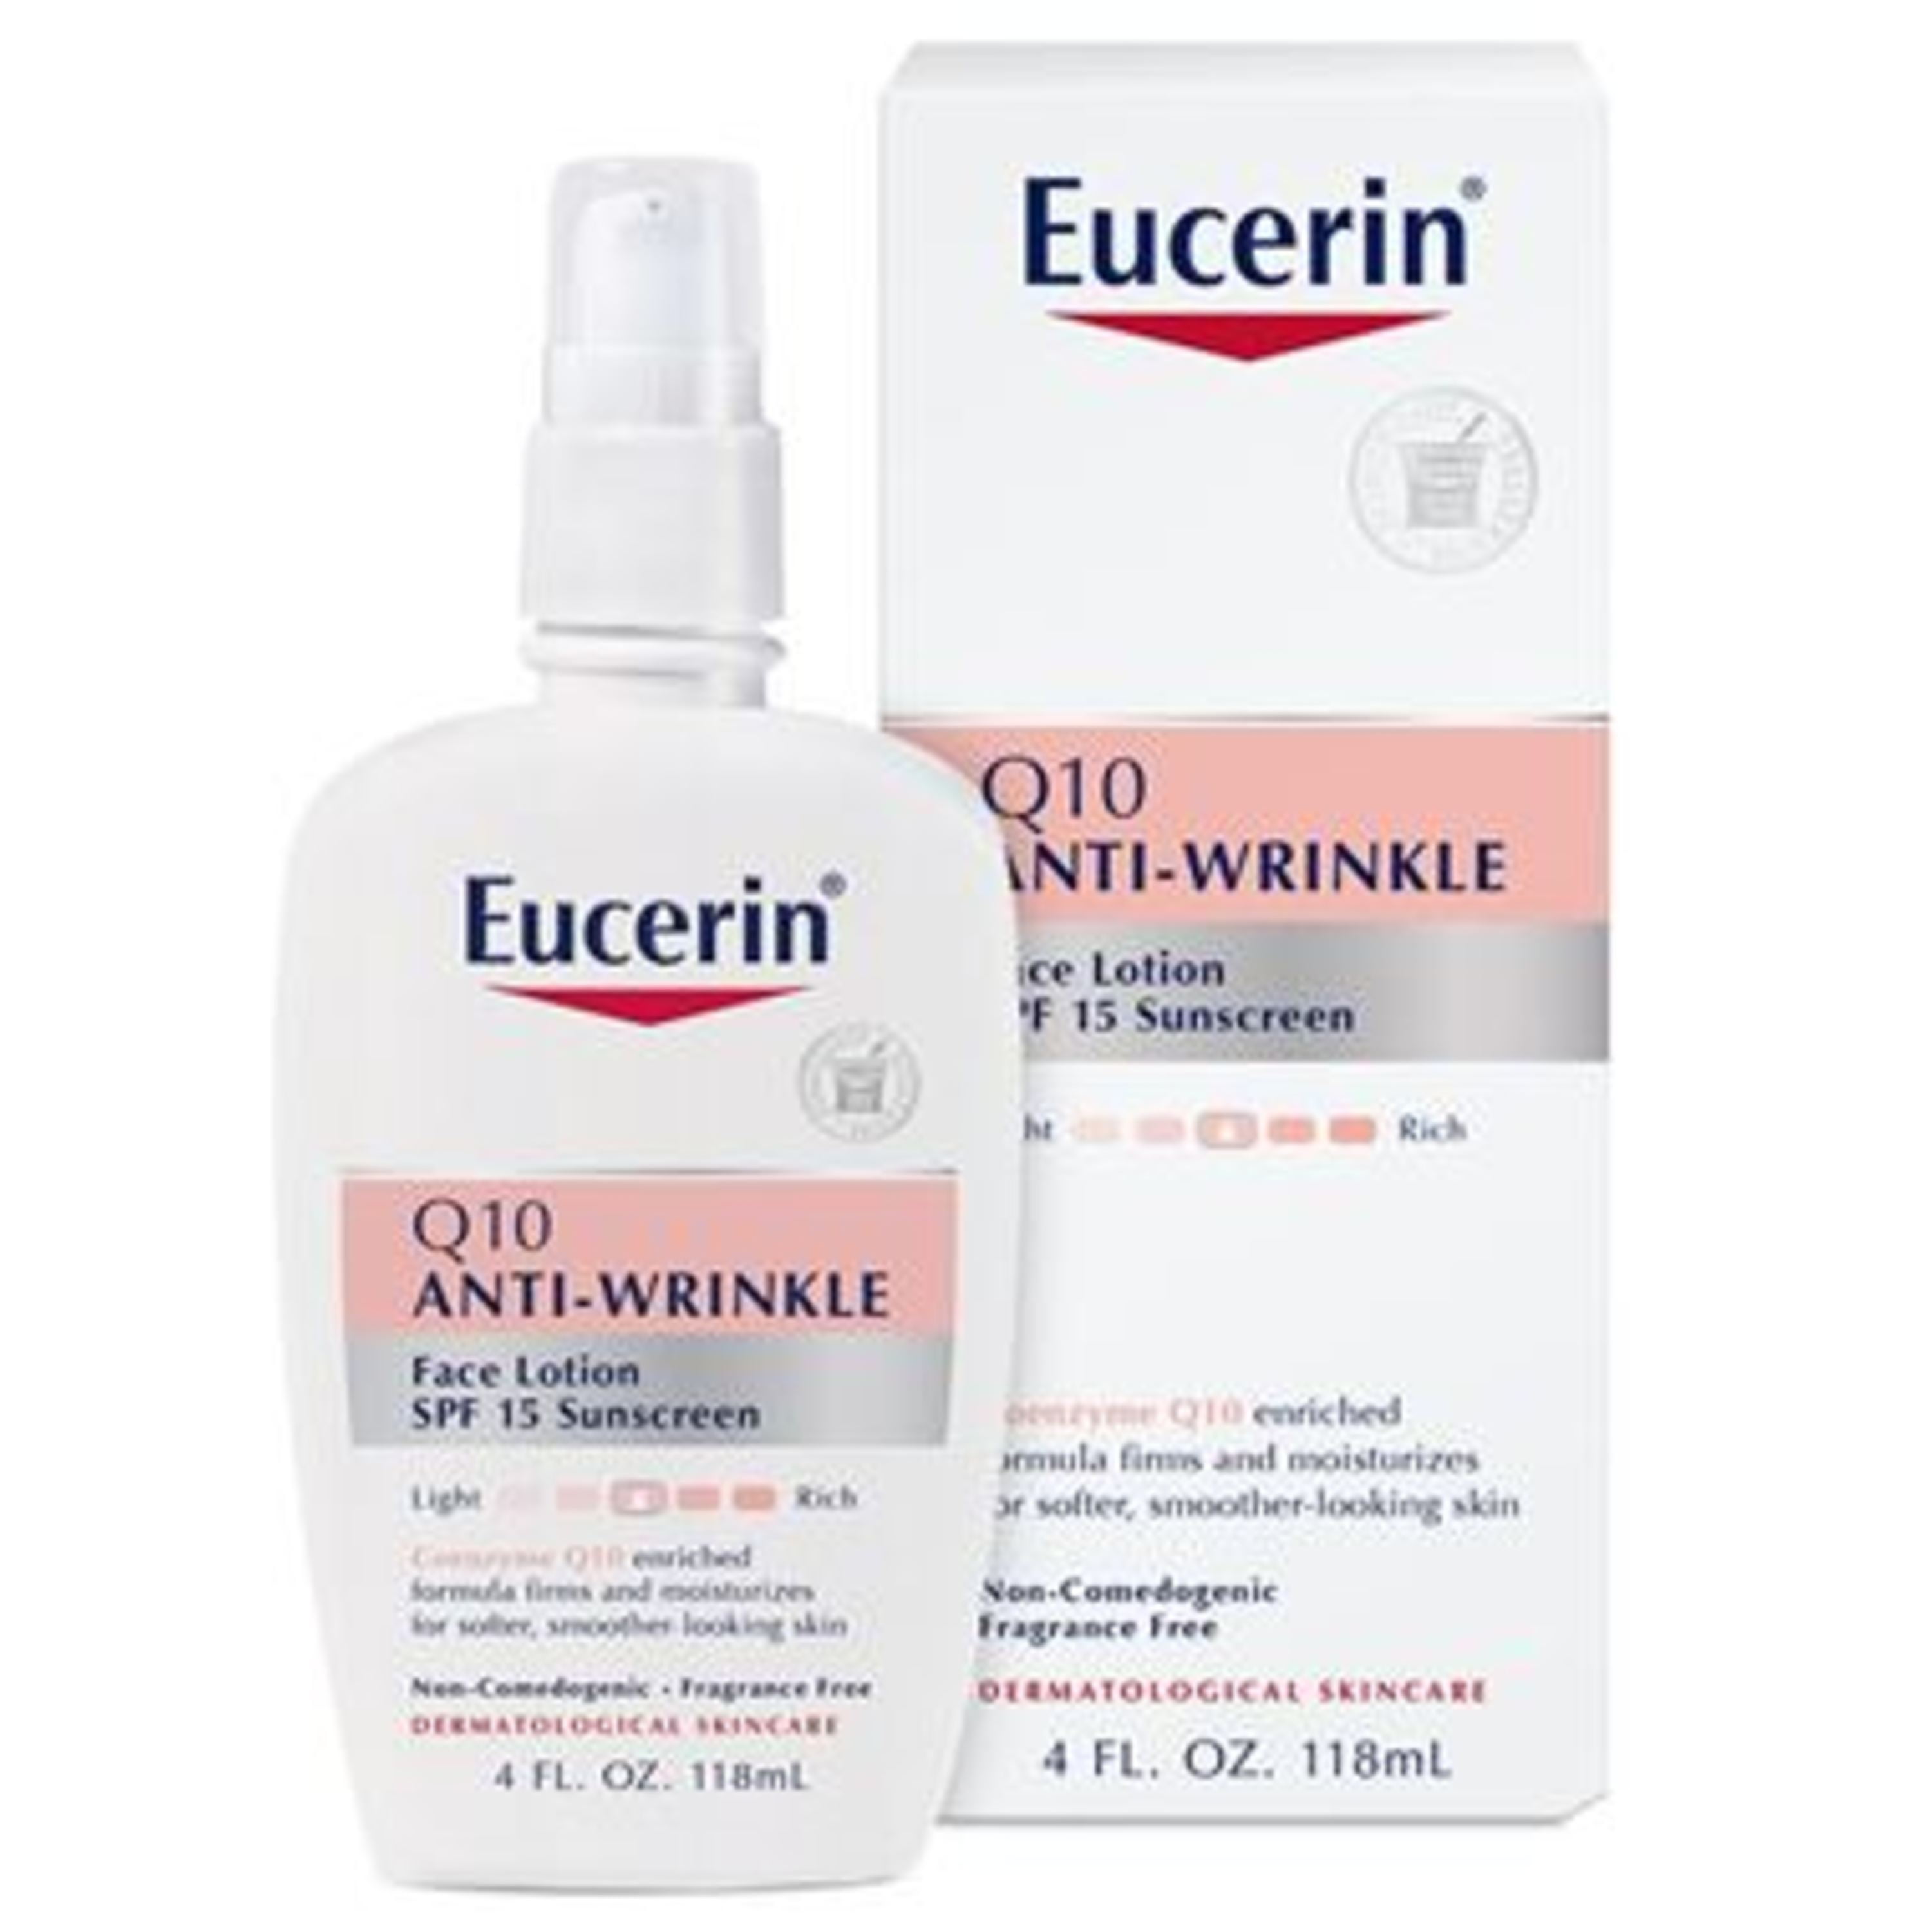 eucerin q10 anti wrinkle cream ingredients